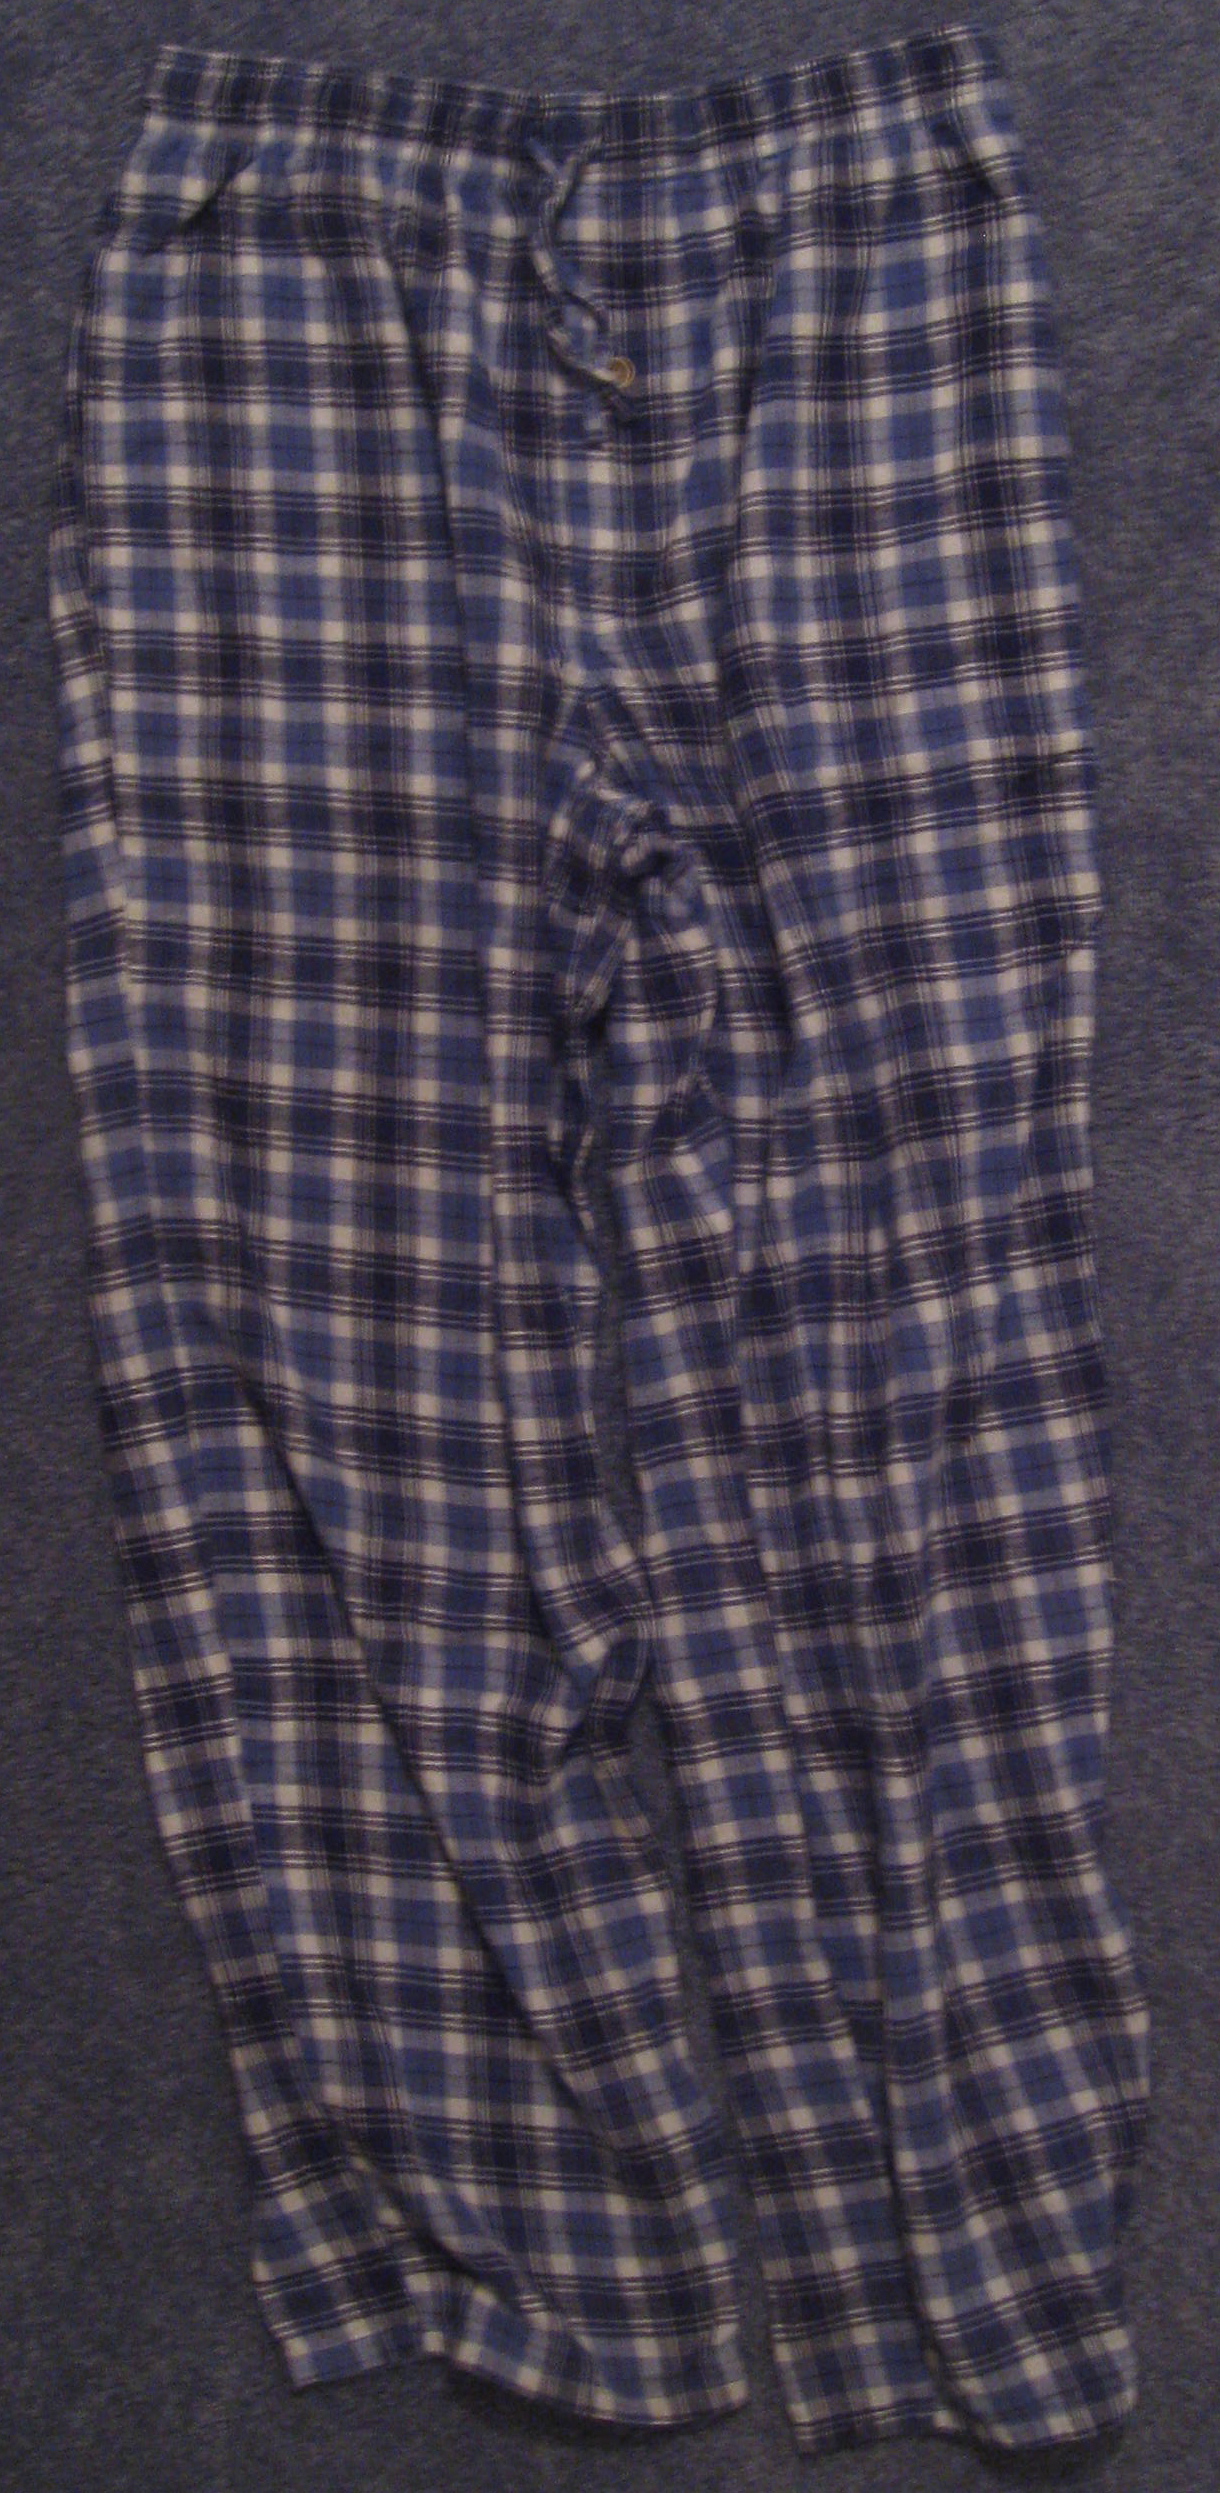 flannel pants